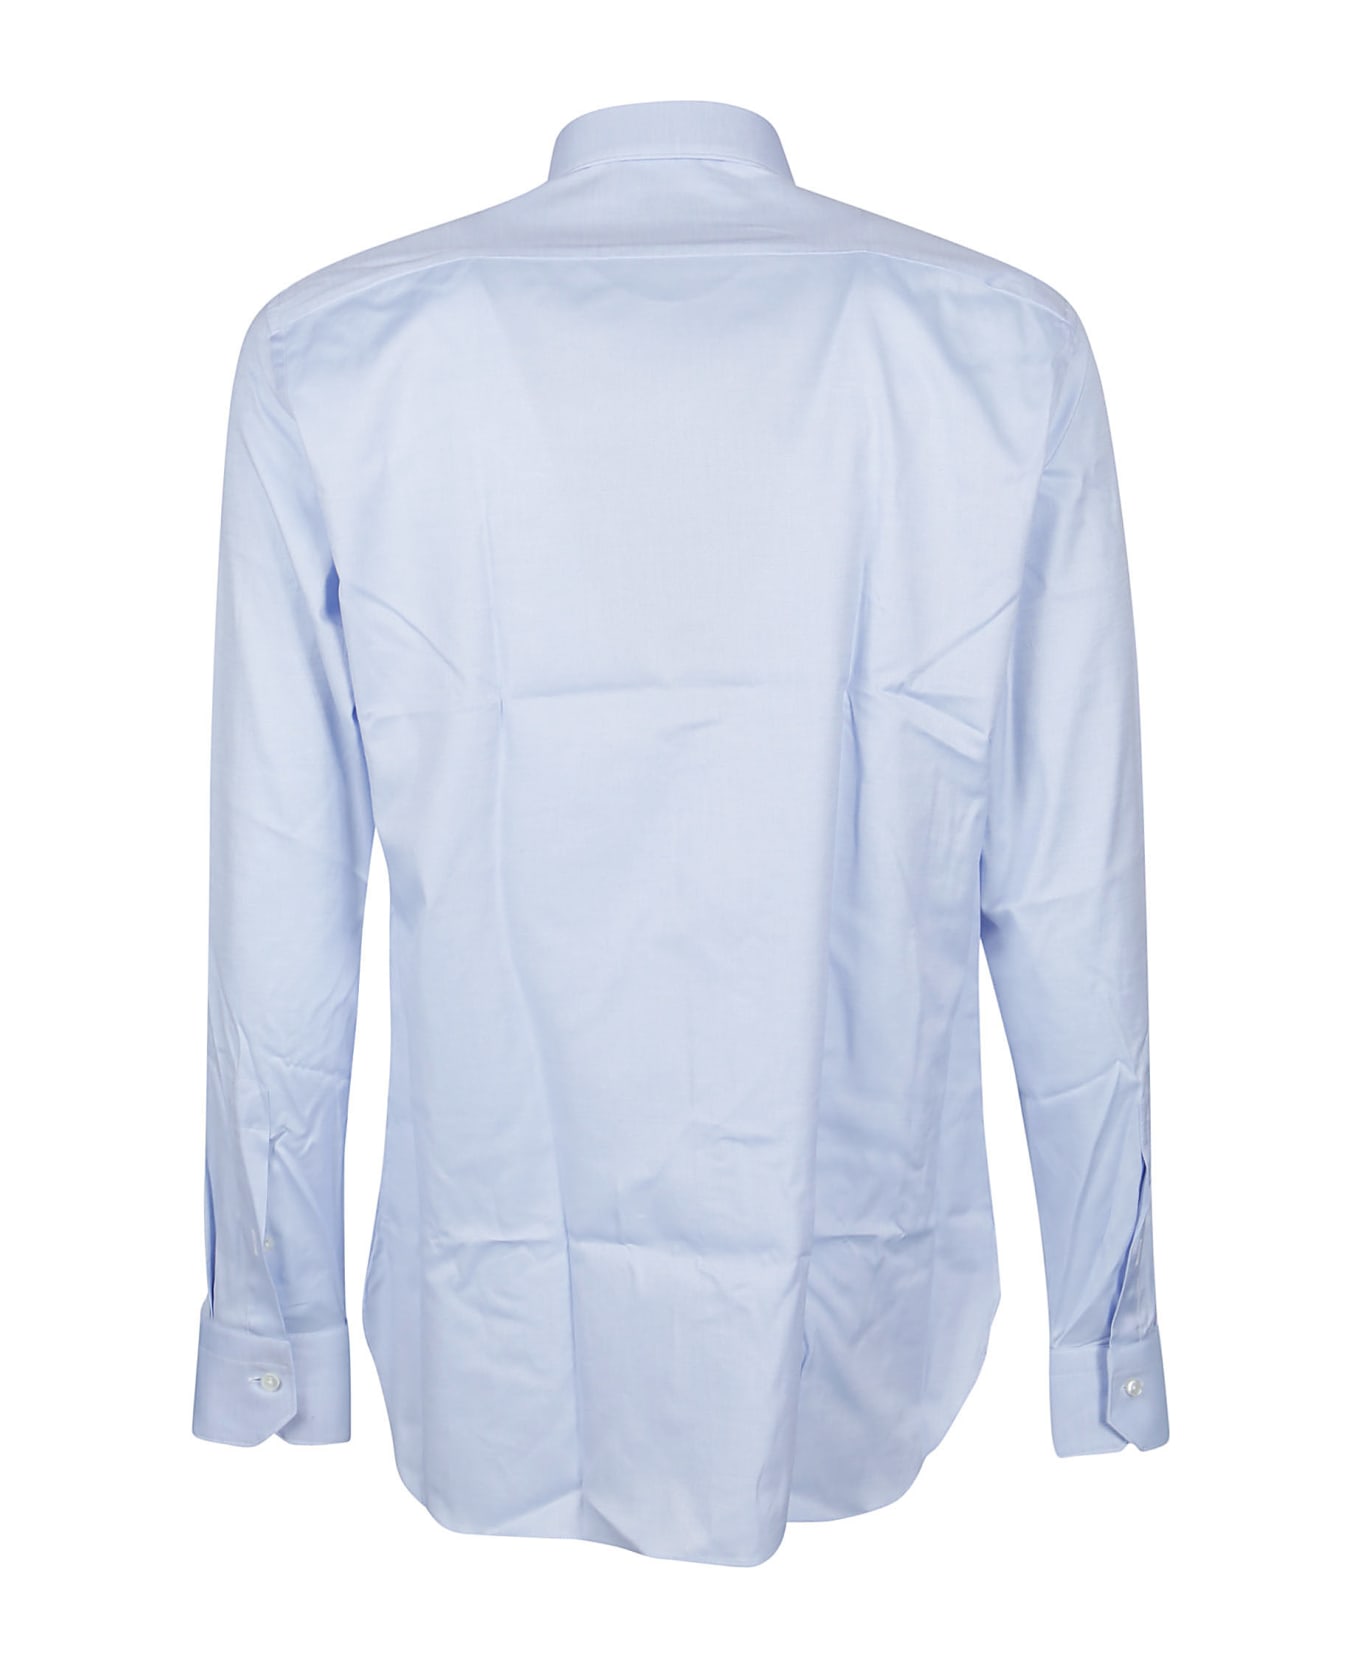 Zegna Lux Tailoring Long Sleeve Shirt - Azzurro シャツ